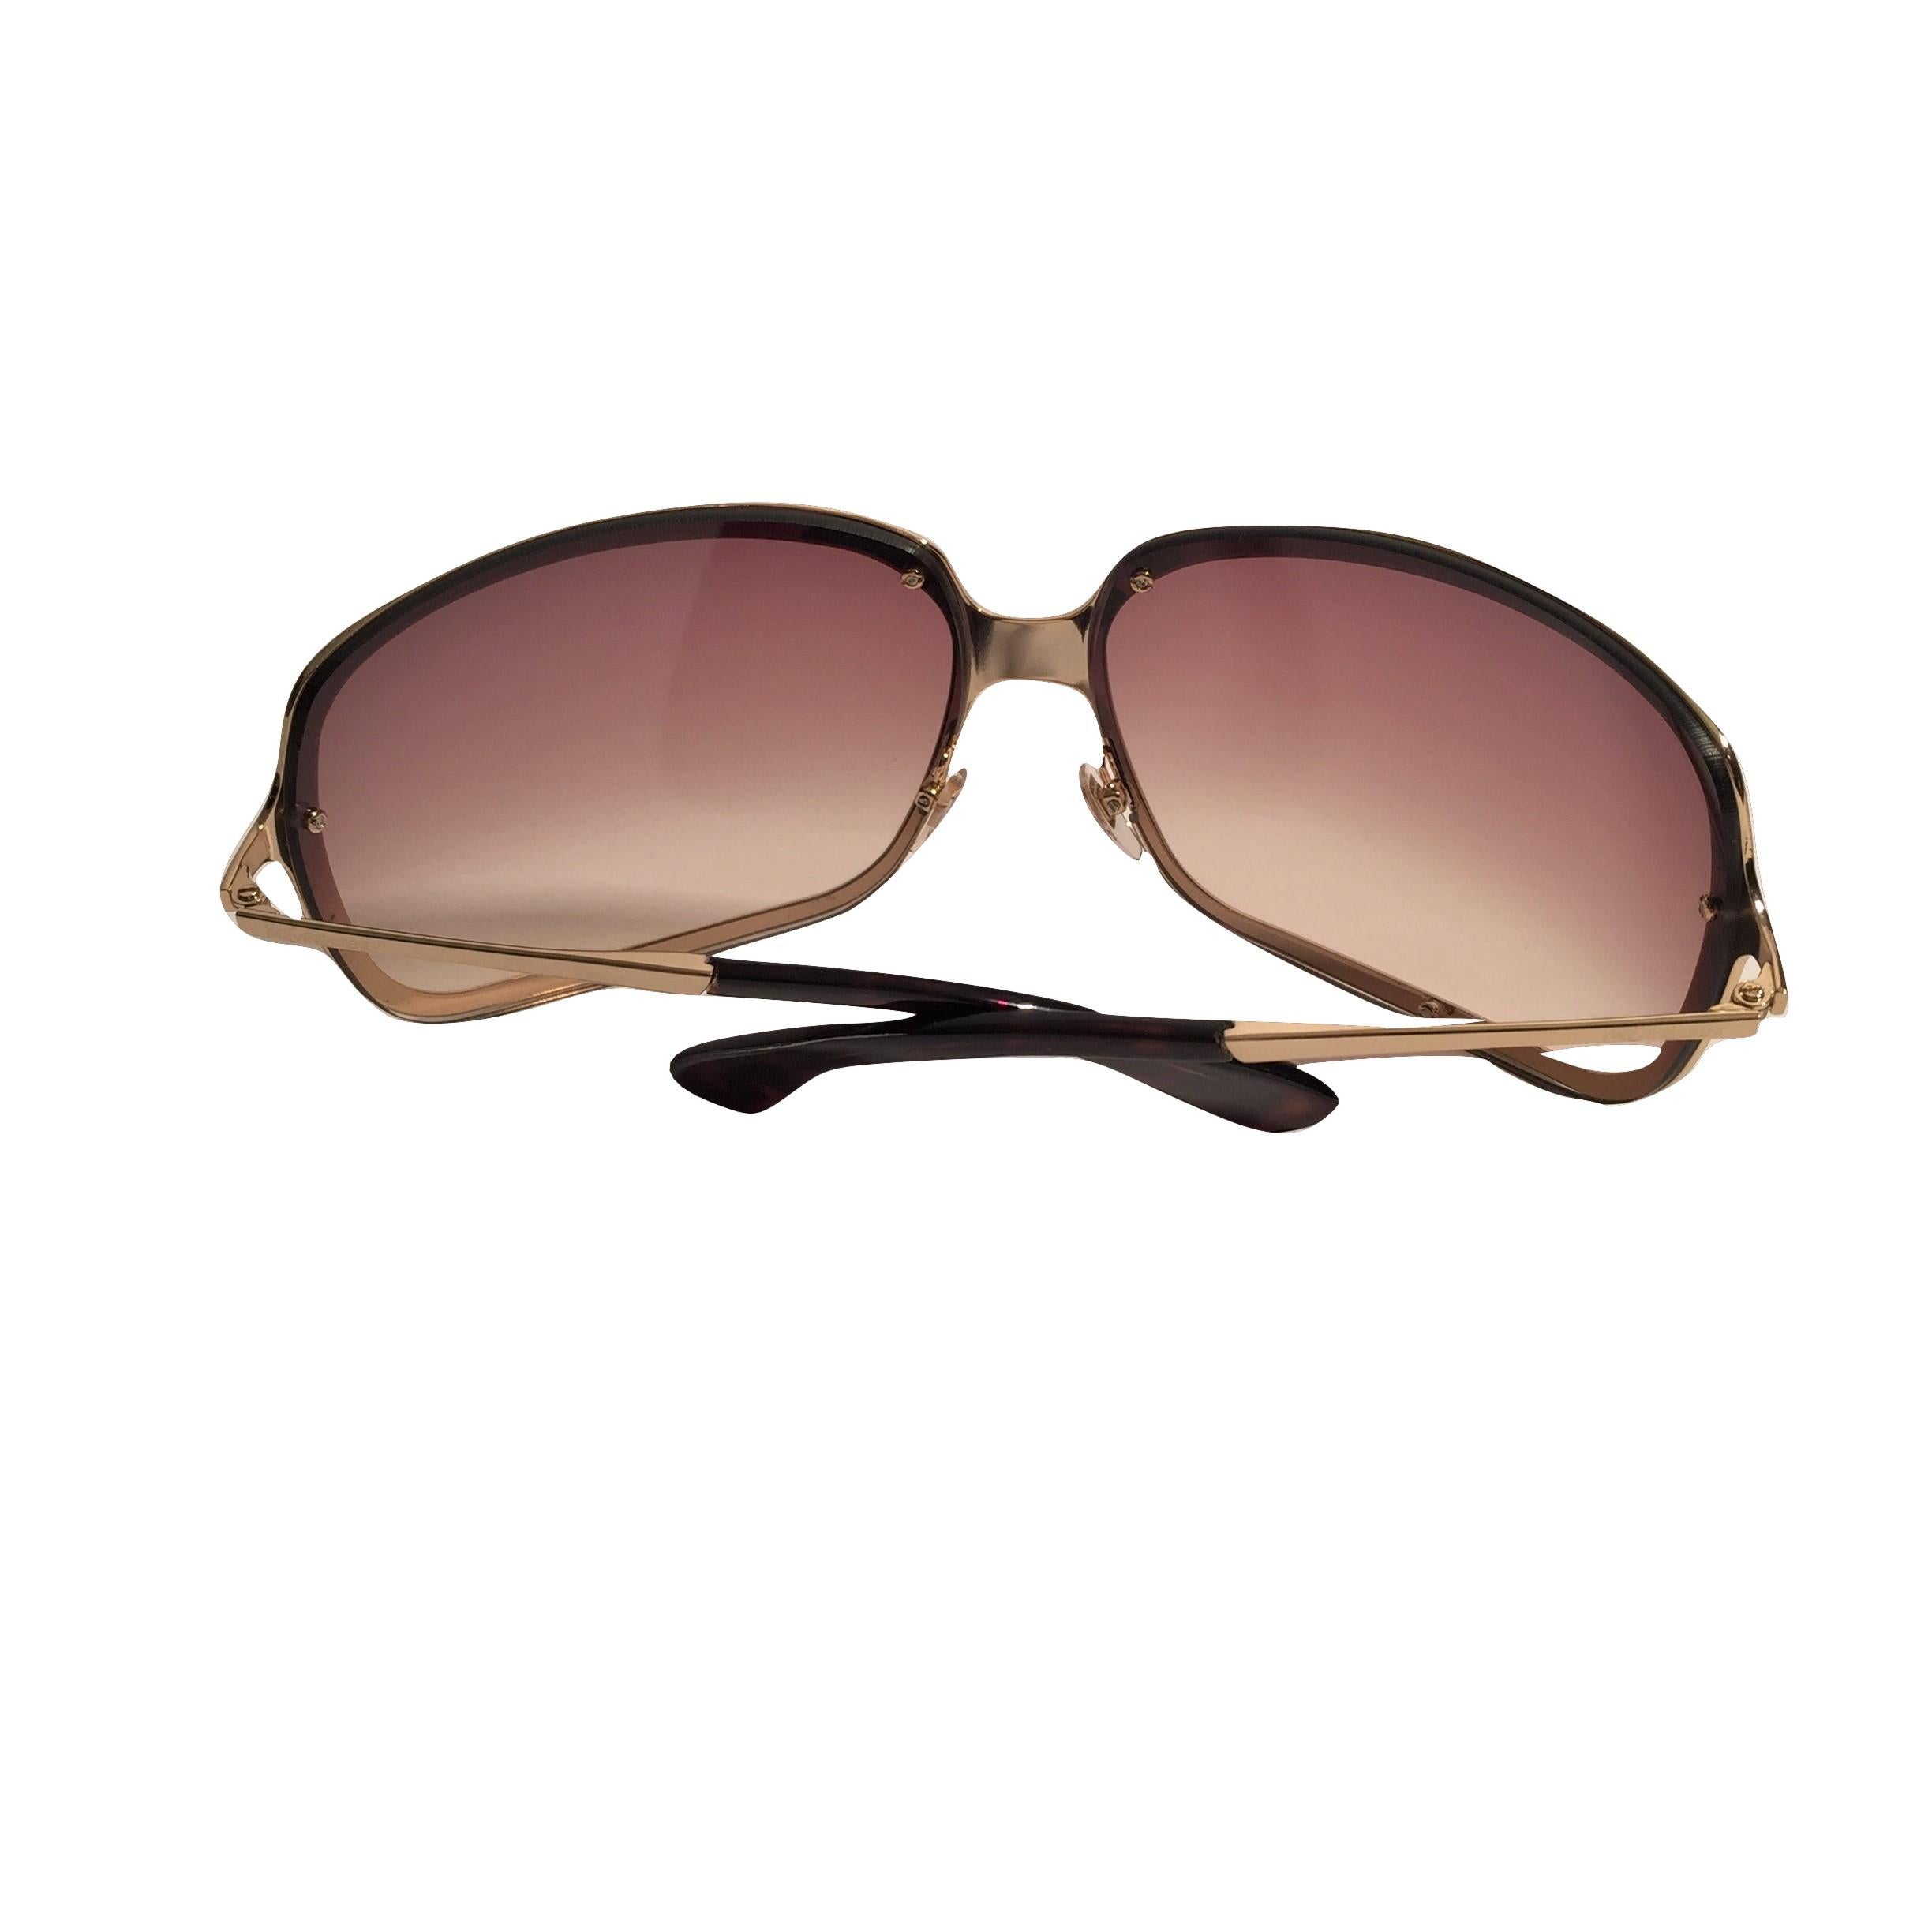 New Yves Saint Laurent YSL Gold Wrap Sunglasses W/ Case 6